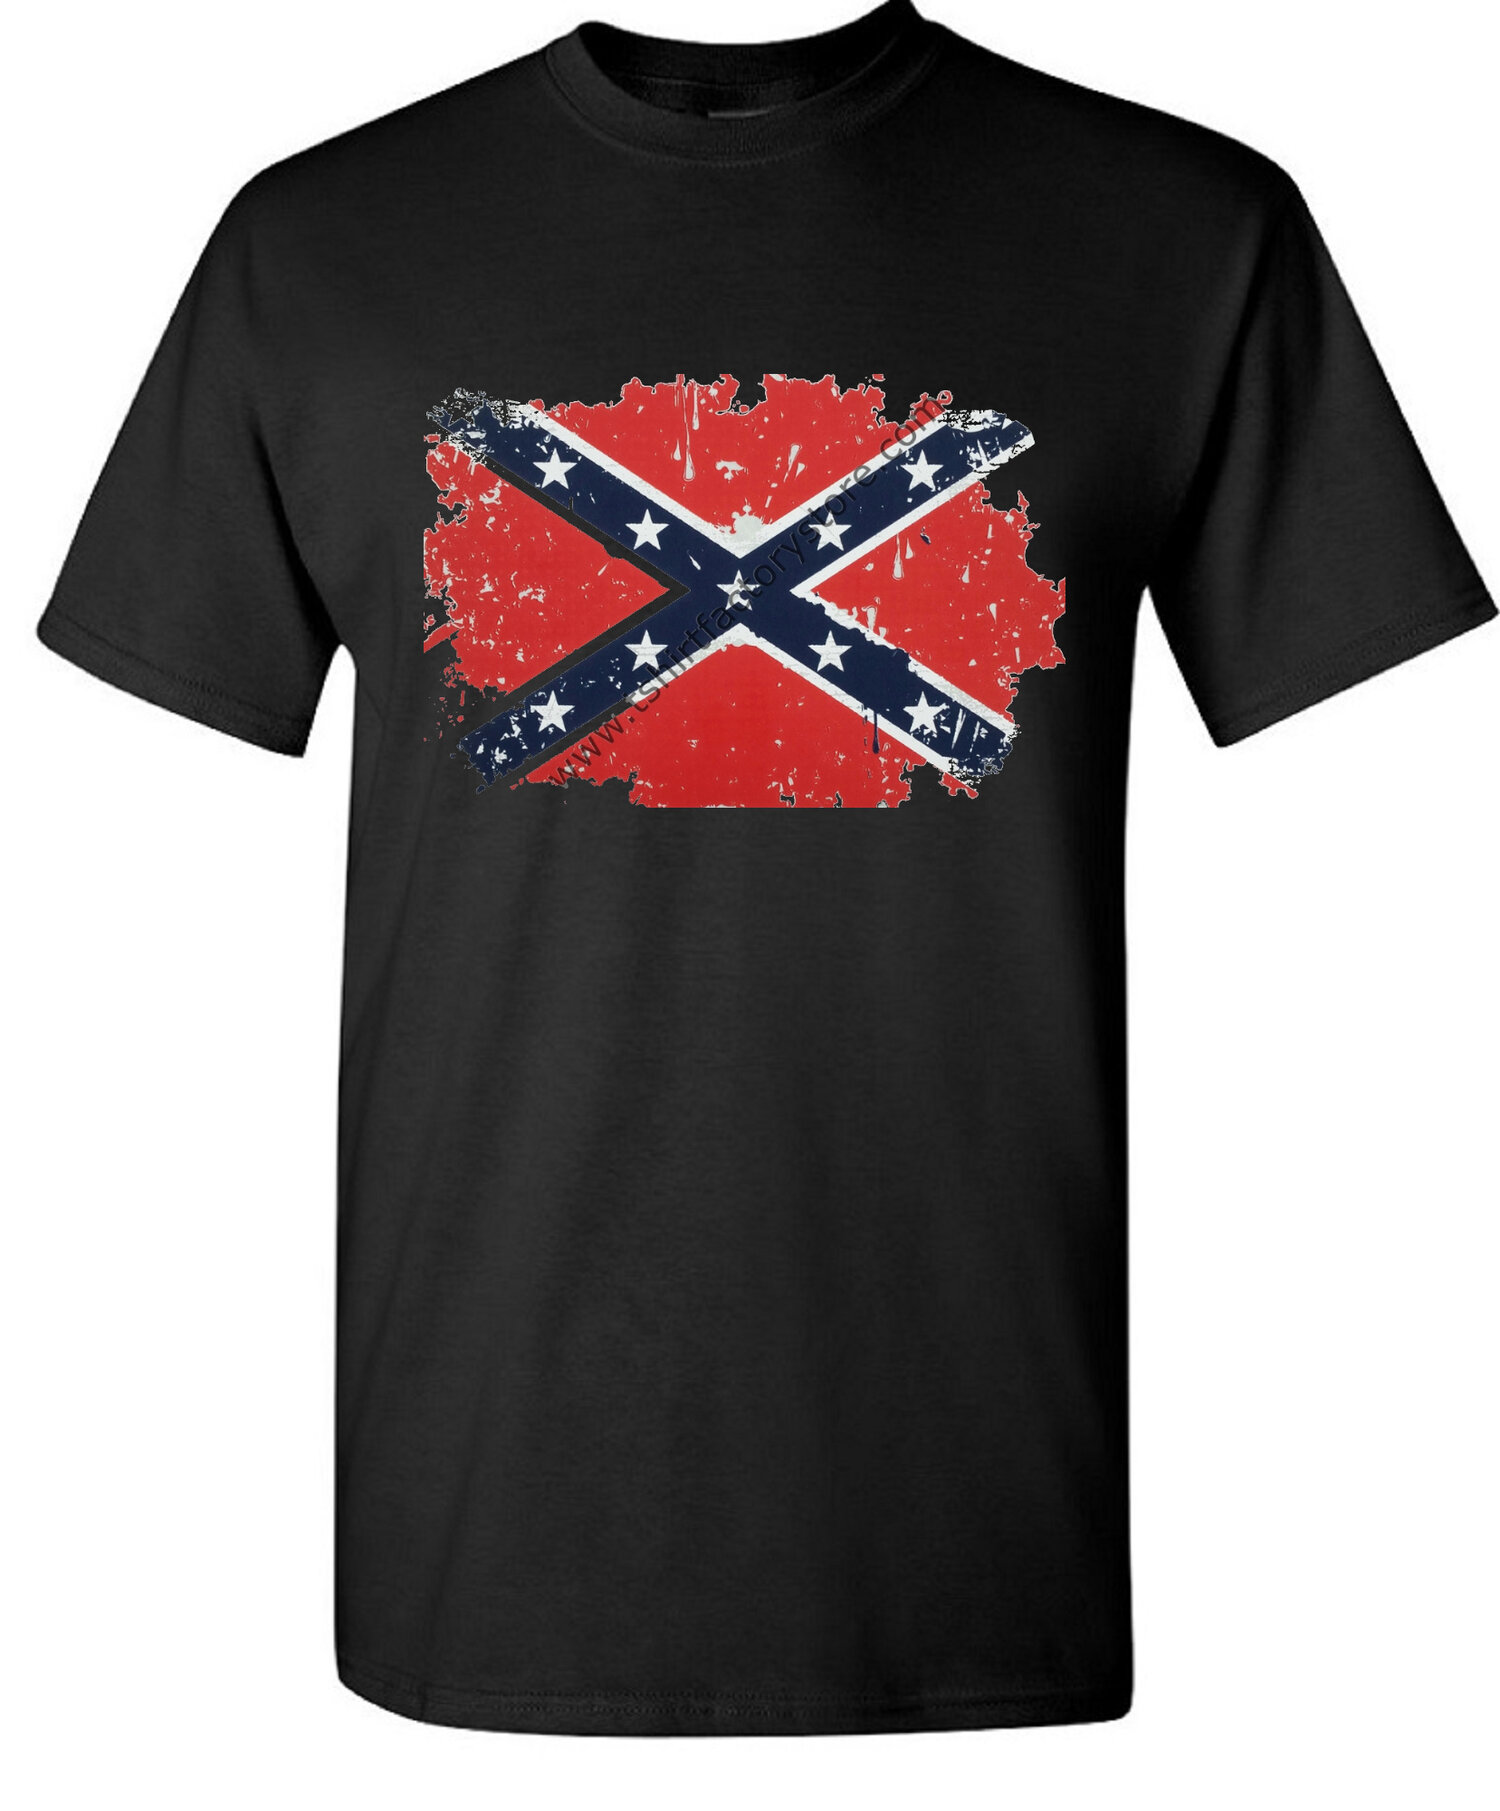 DISTRESSED FLAG T-SHIRT — T-Shirt Factory: Shop Printed T-Shirts, Sweatshirts and Hoodies